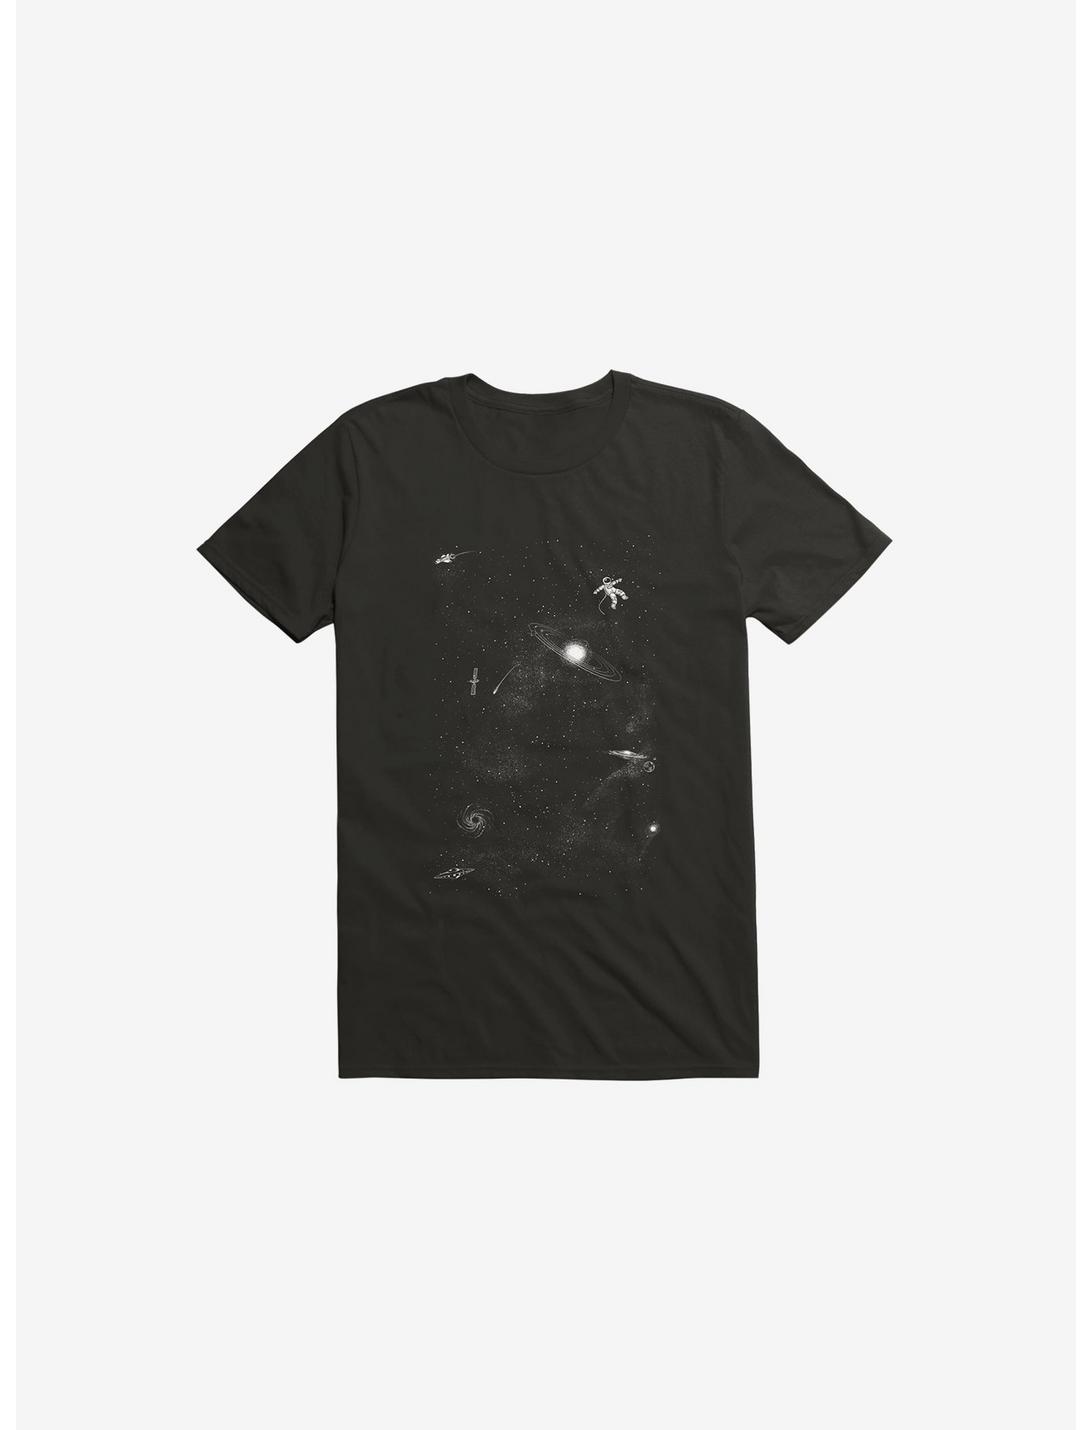 Gravity 3.0 Astronaut Black T-Shirt, BLACK, hi-res